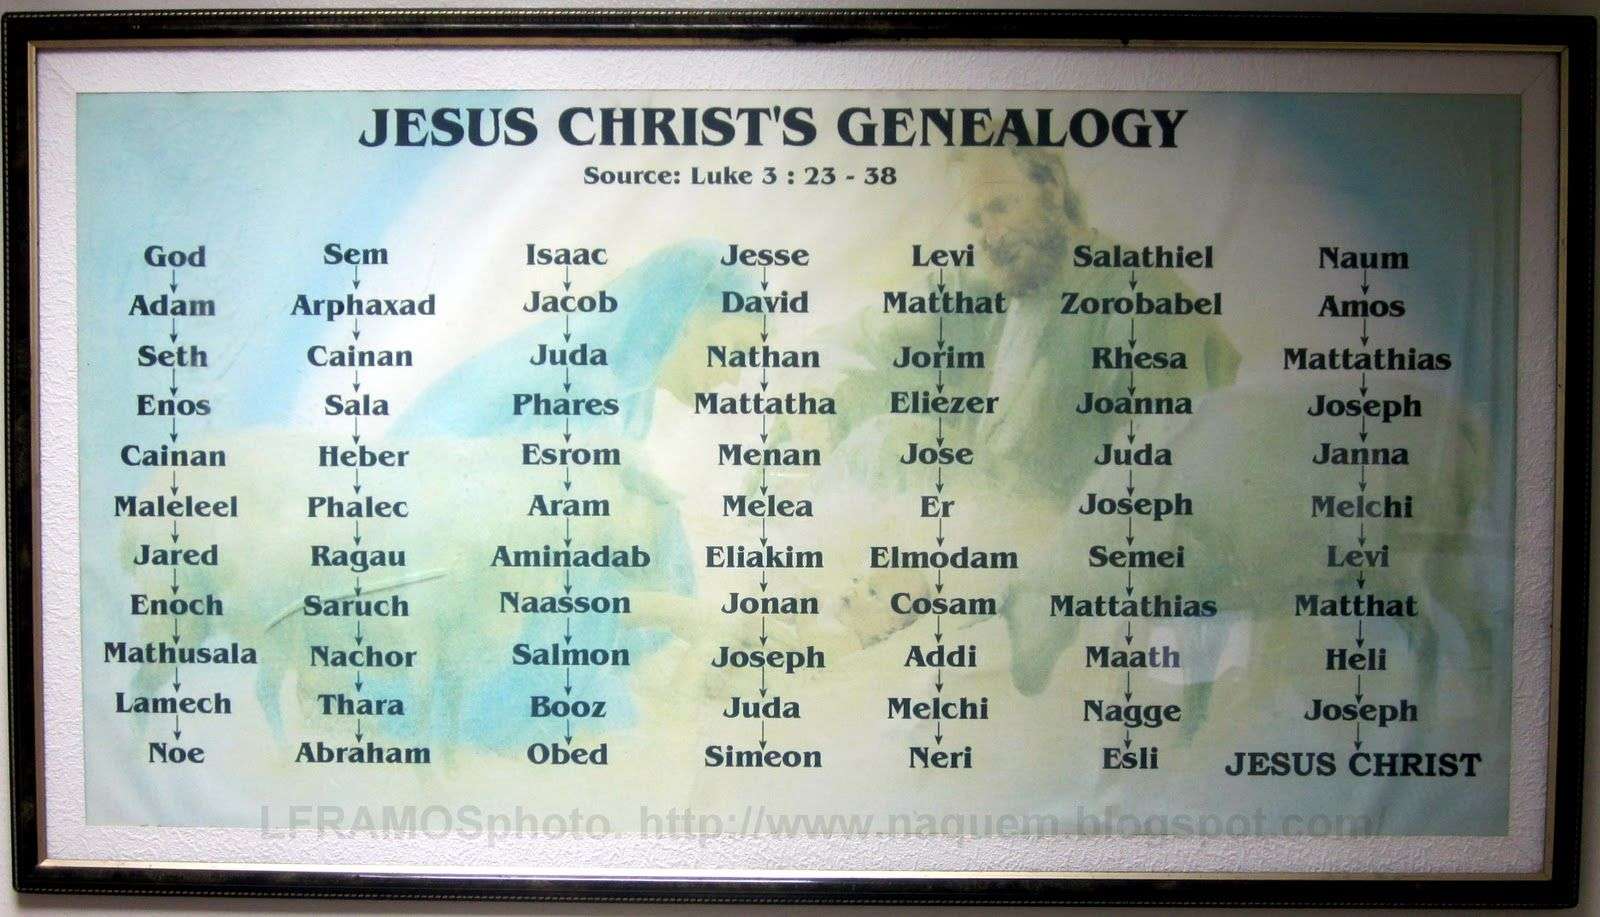 The Genealogy of Jesus from Adam to Jesus